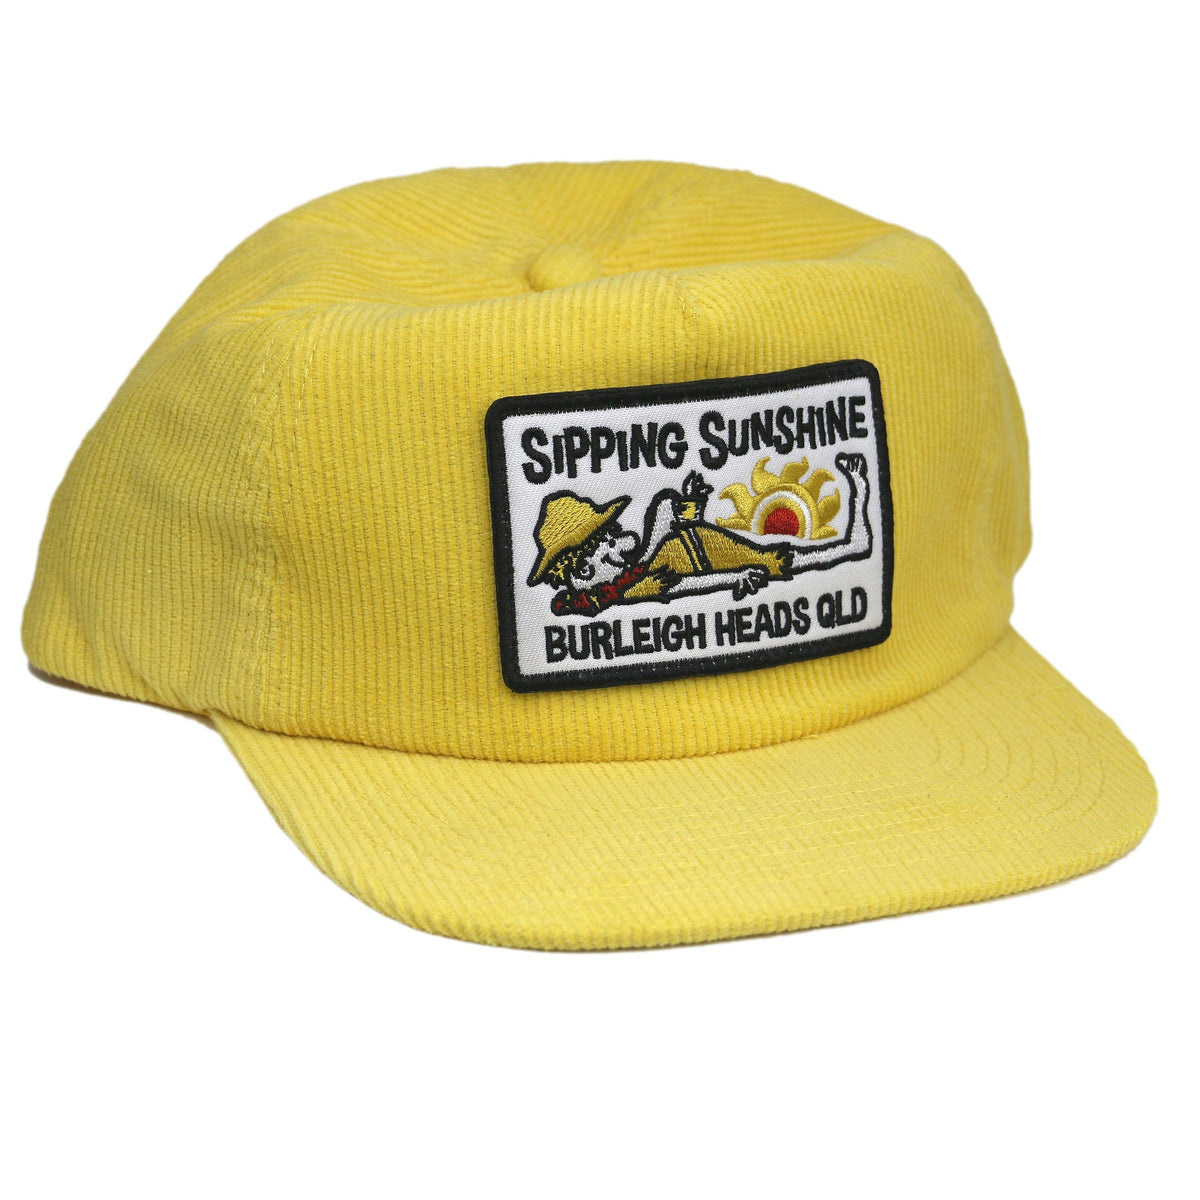 Sipping Sunshine - Yellow Corduroy Cap